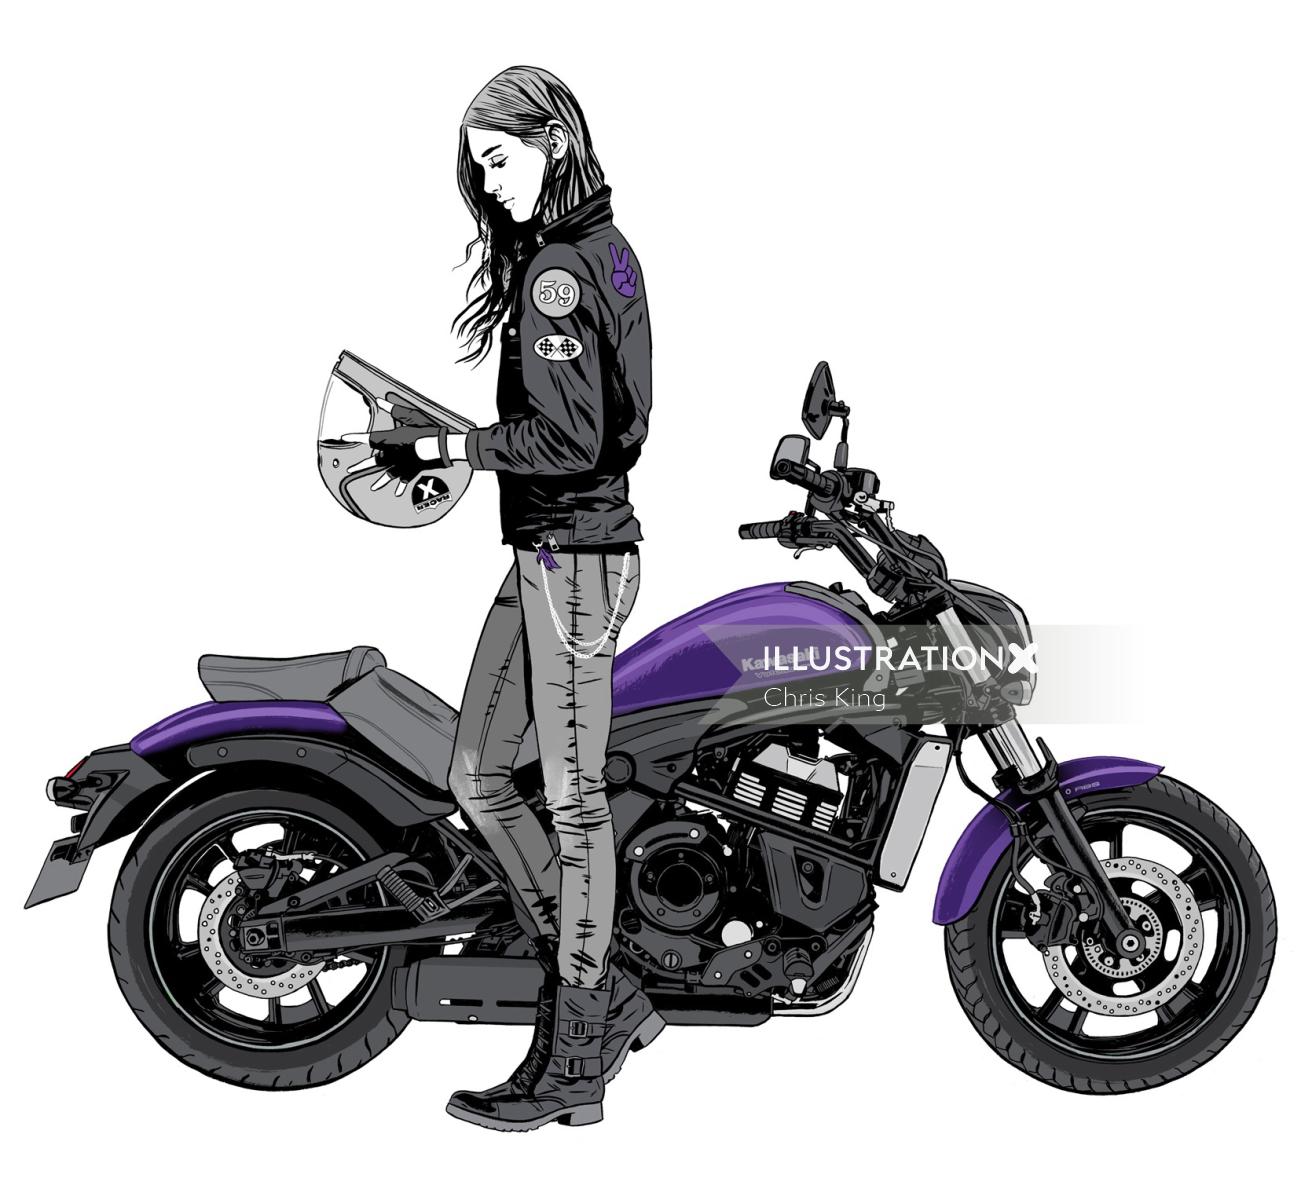 Lady bike rider illustration by Cris King